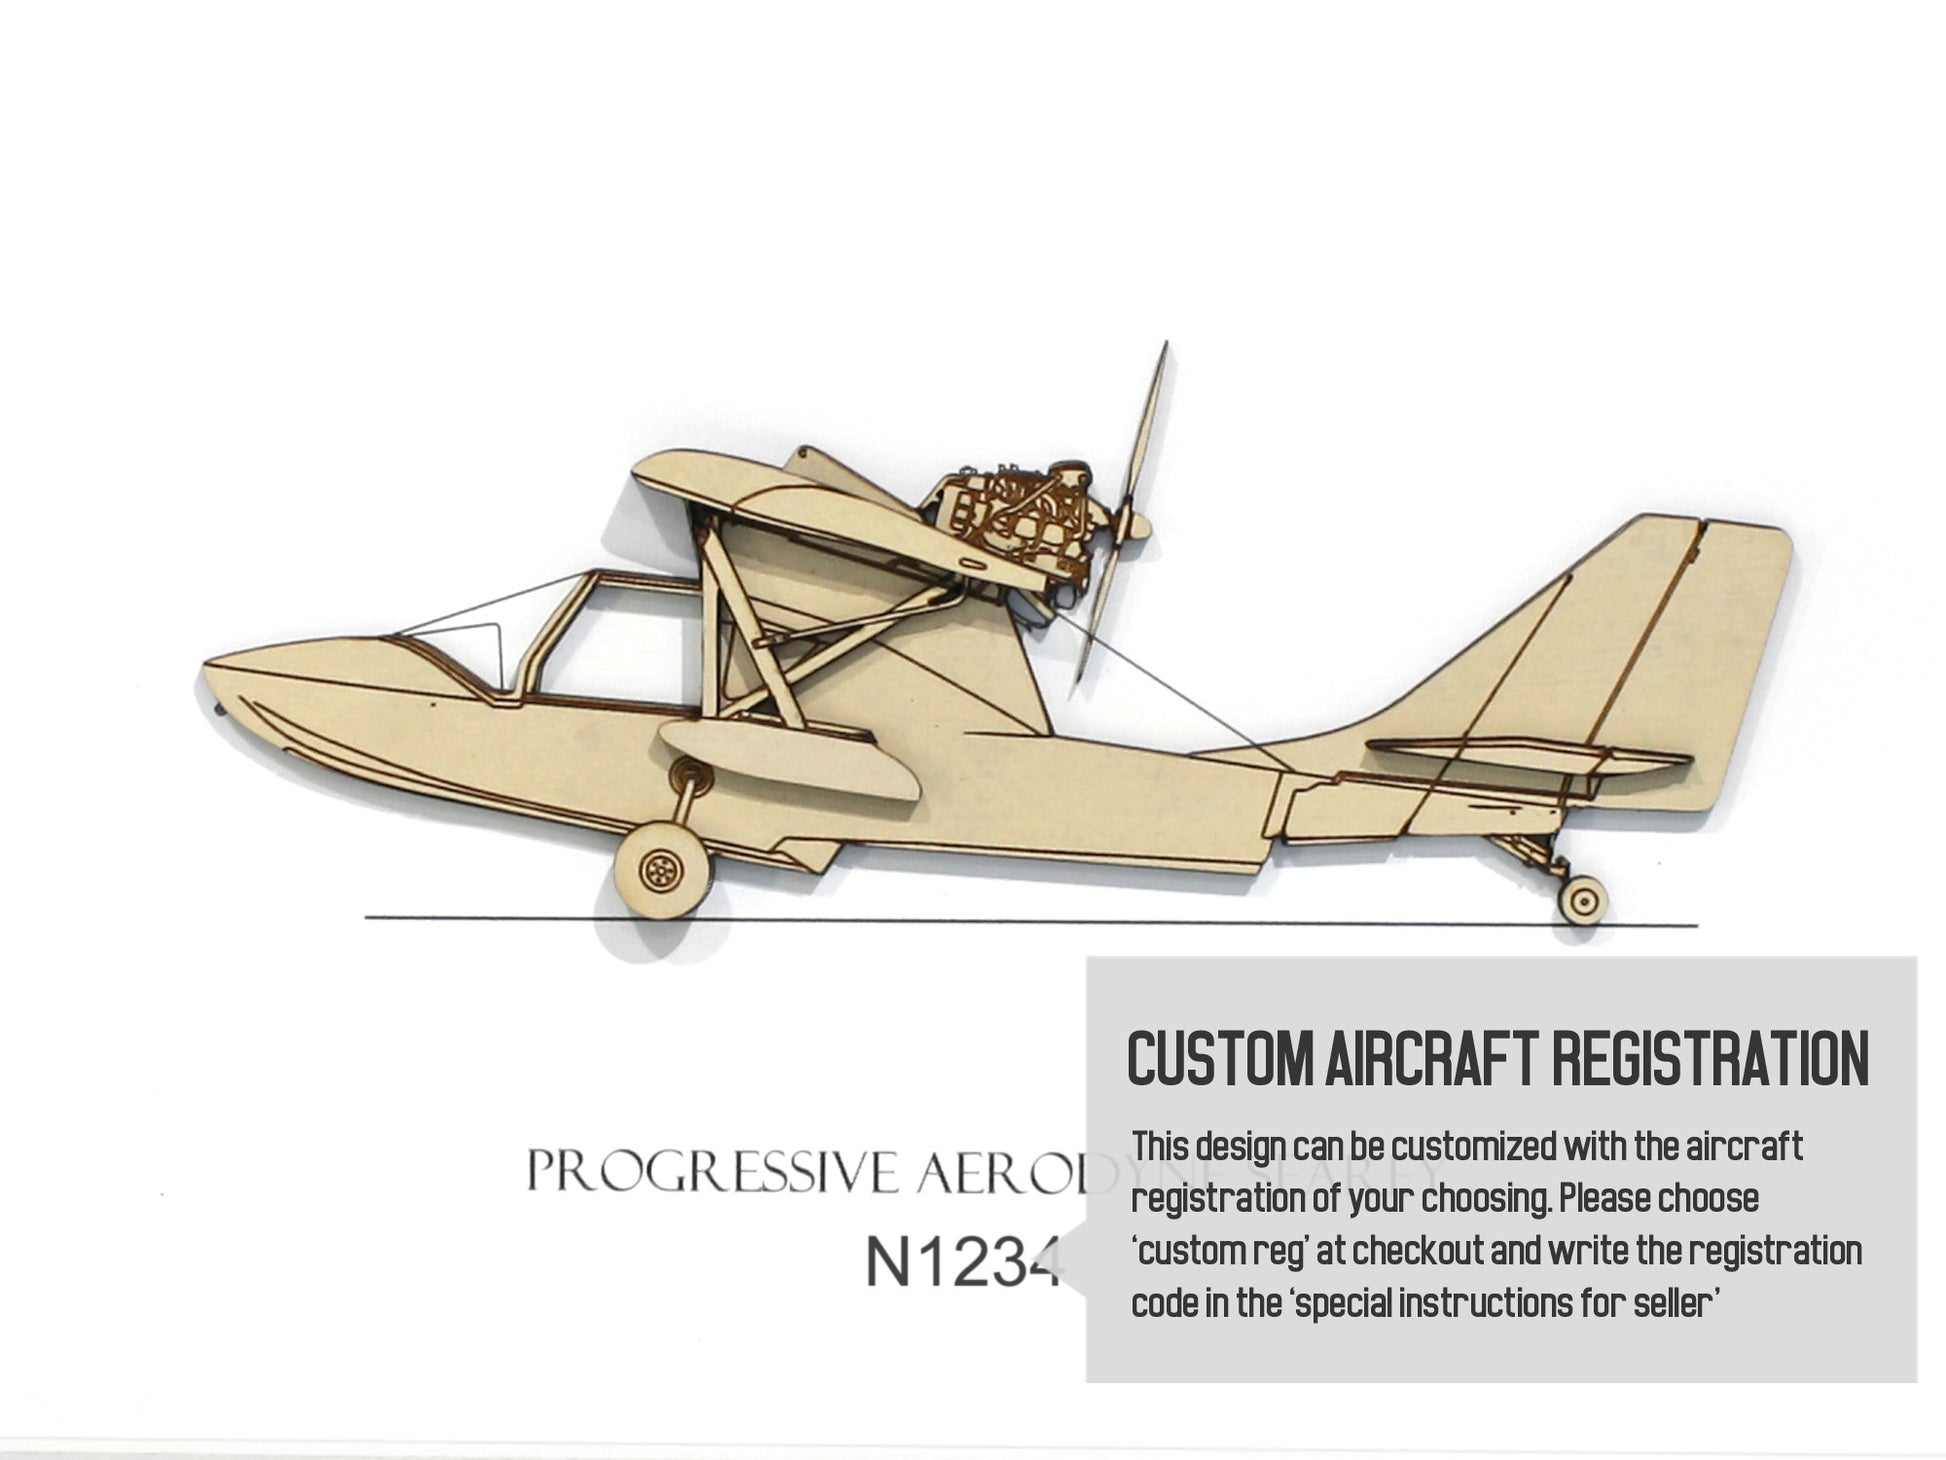 Progressive Aerodyne SeaRey aviation art